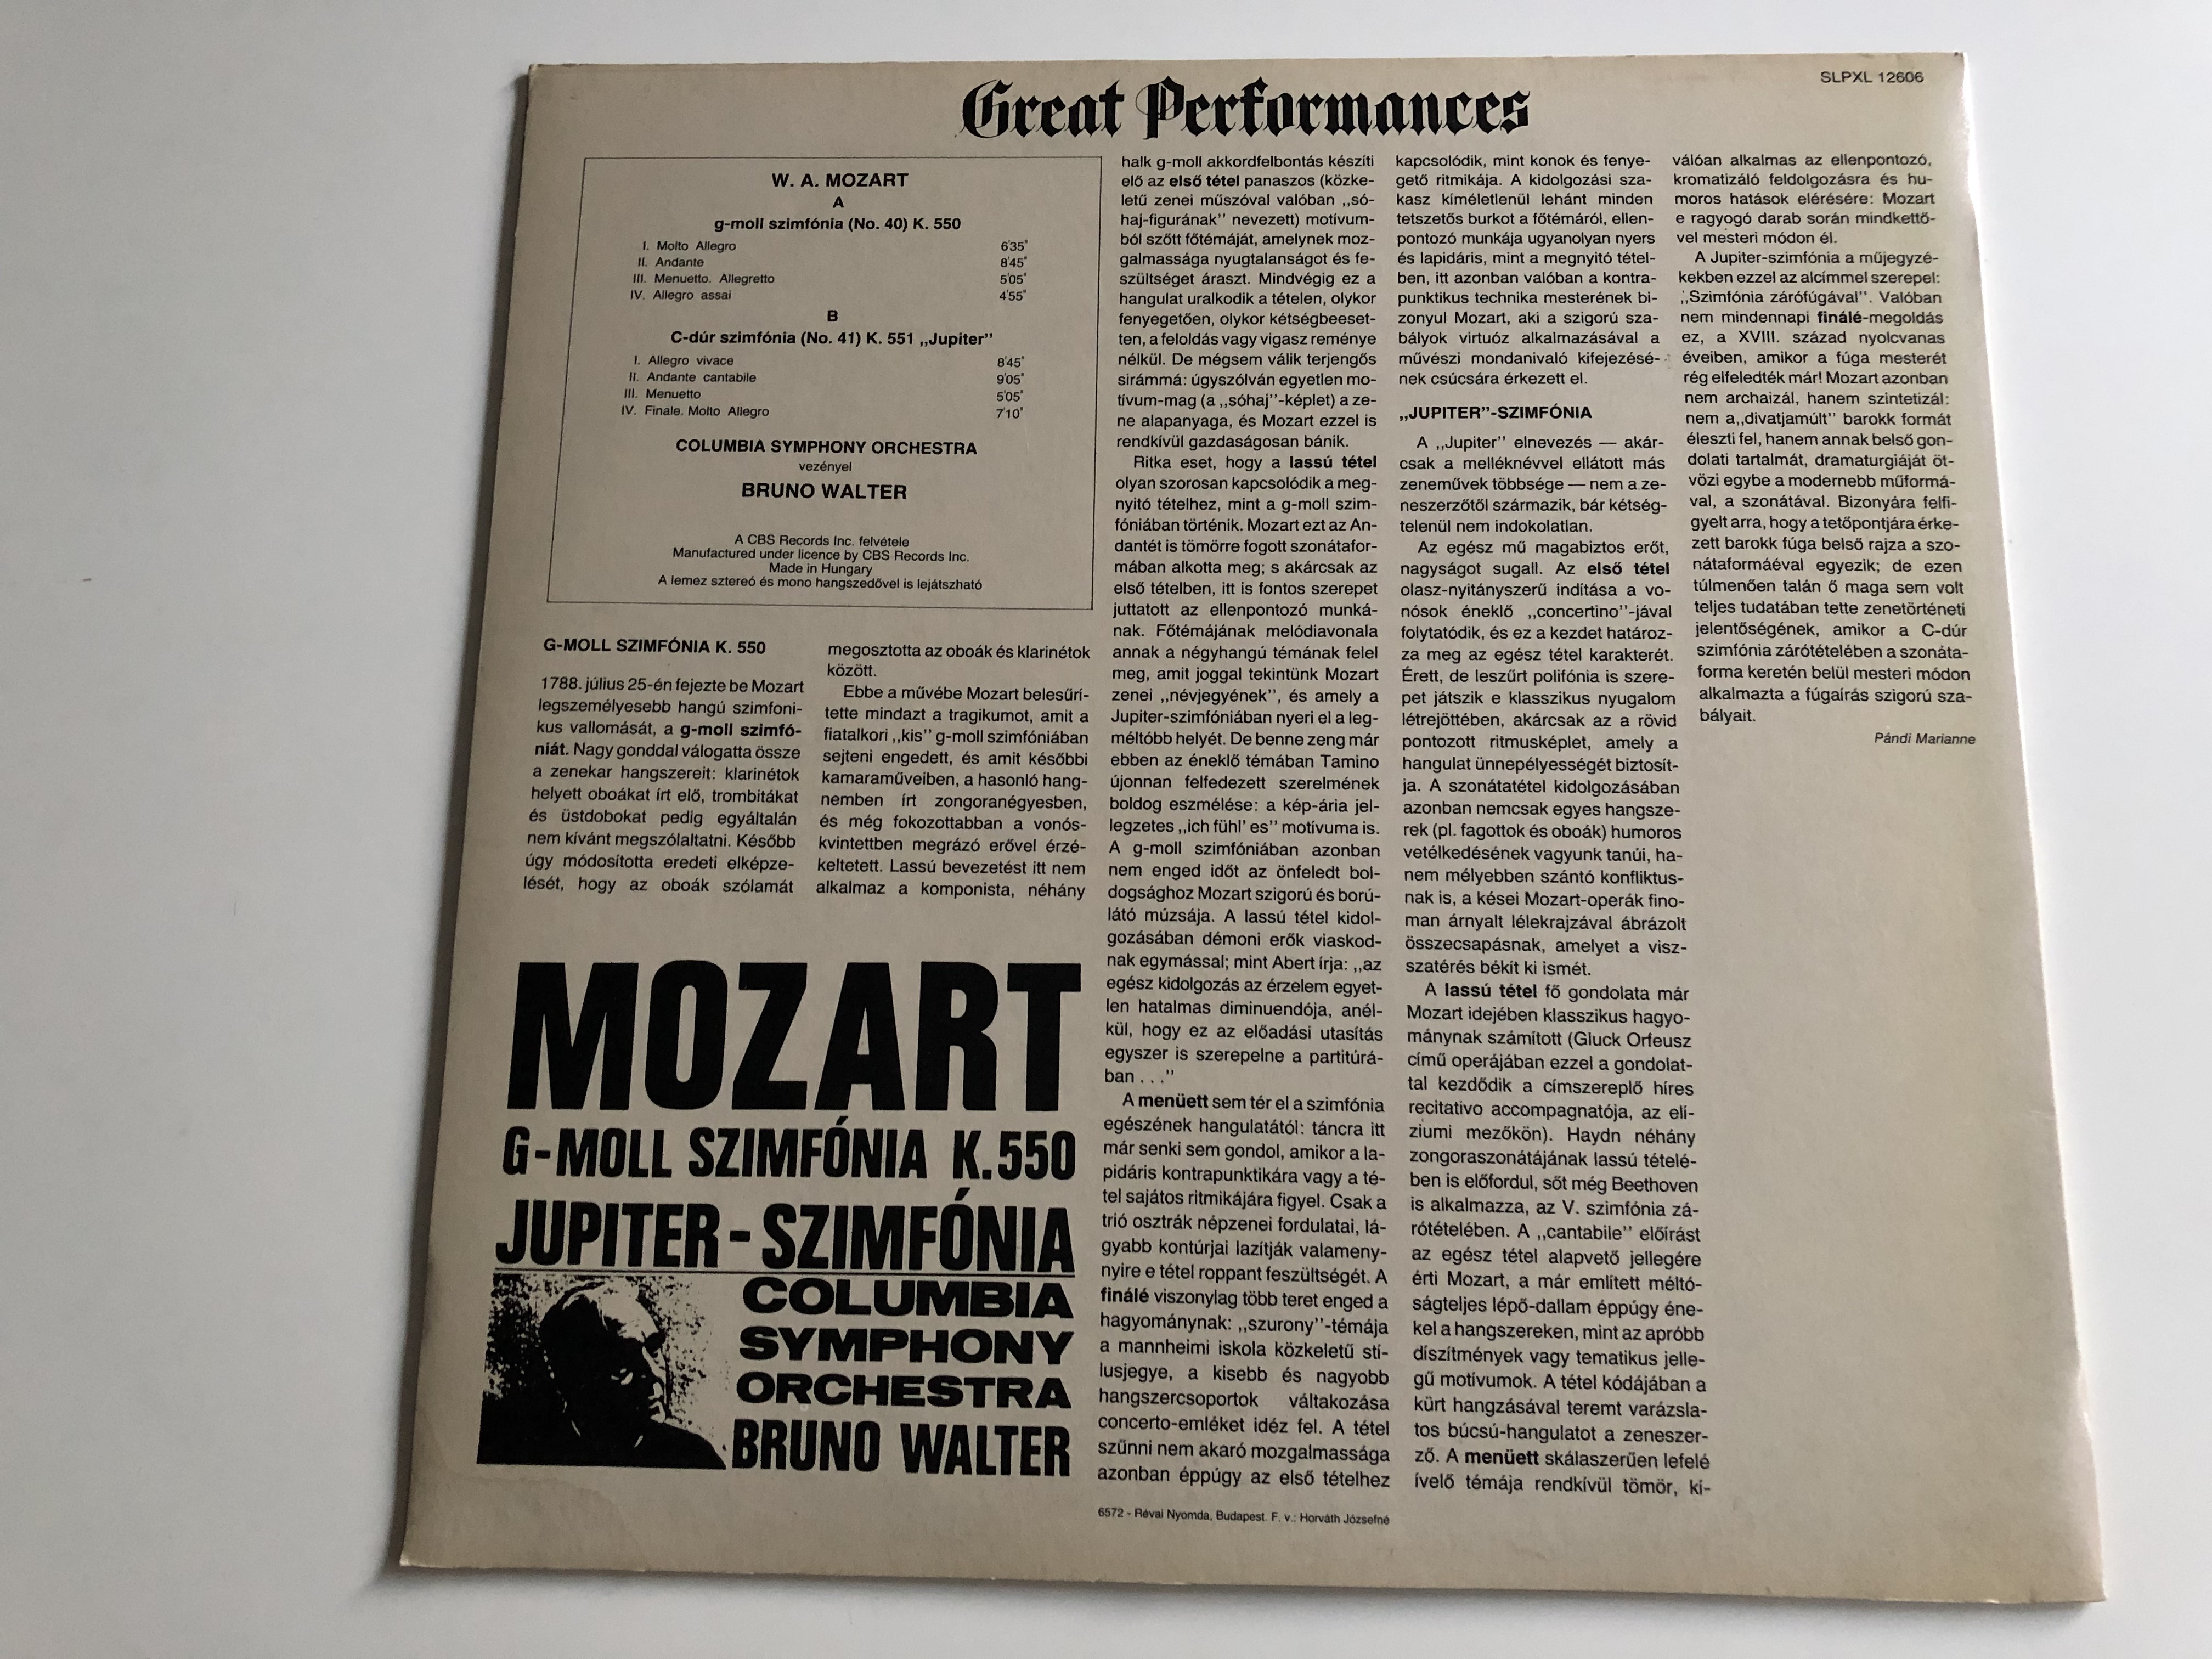 mozart-g-moll-szimfonia-k.-550-jupiter-szimfonia-columbia-symphony-orchestra-conducted-bruno-walter-hungaroton-lp-stereo-slpxl-12606-2-.jpg